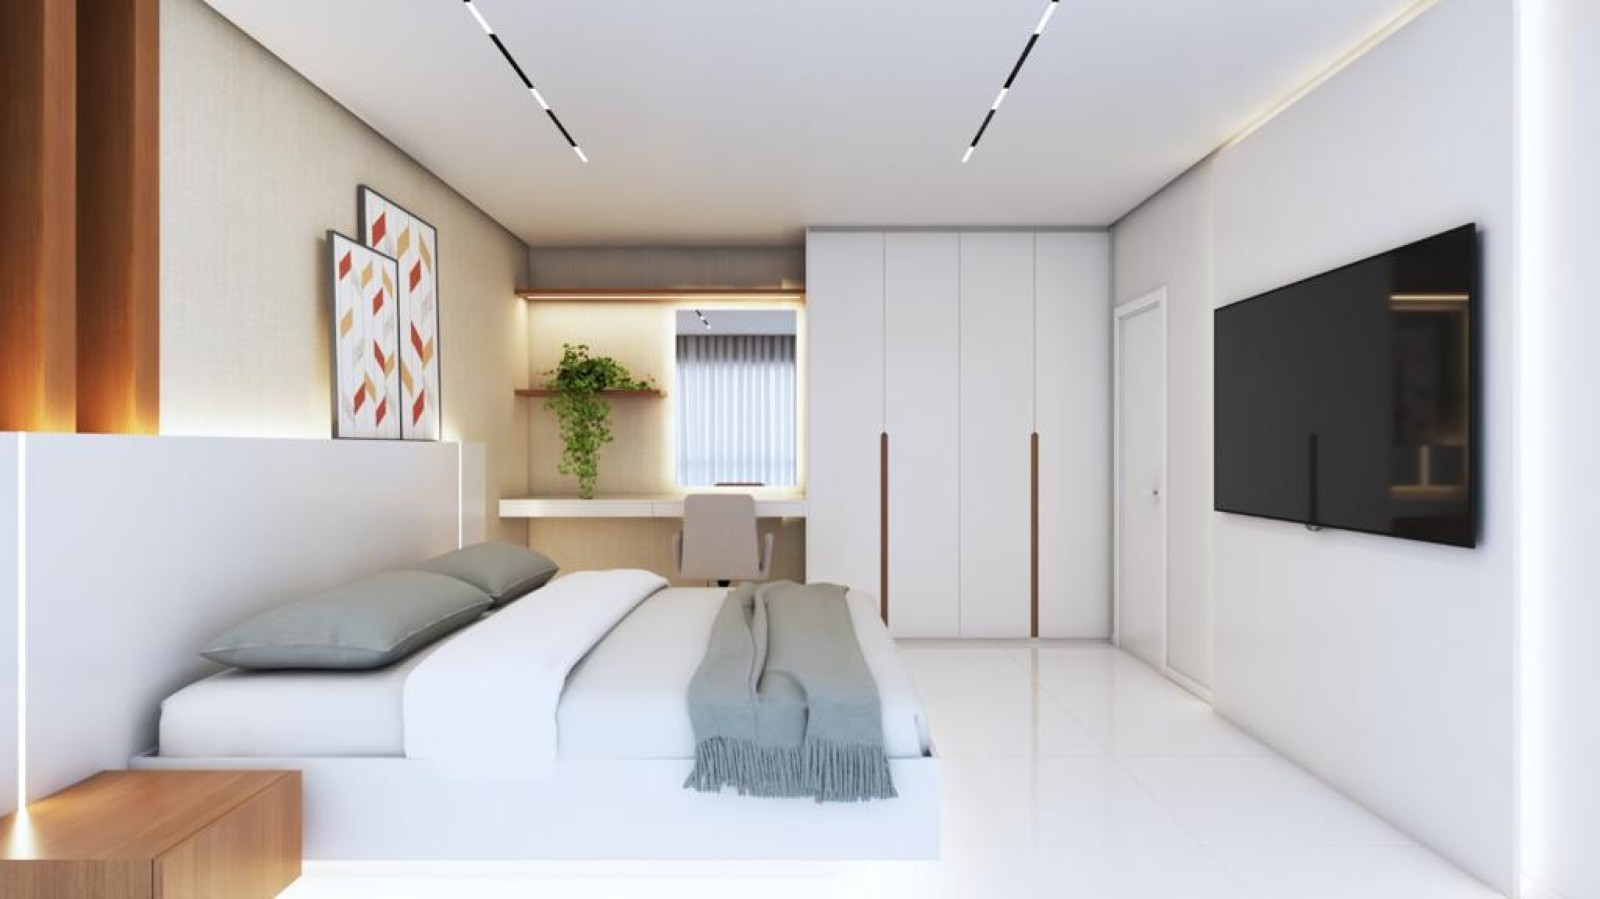 2 Bedroom Luxury House, for sale, in Portimão, Algarve_224209